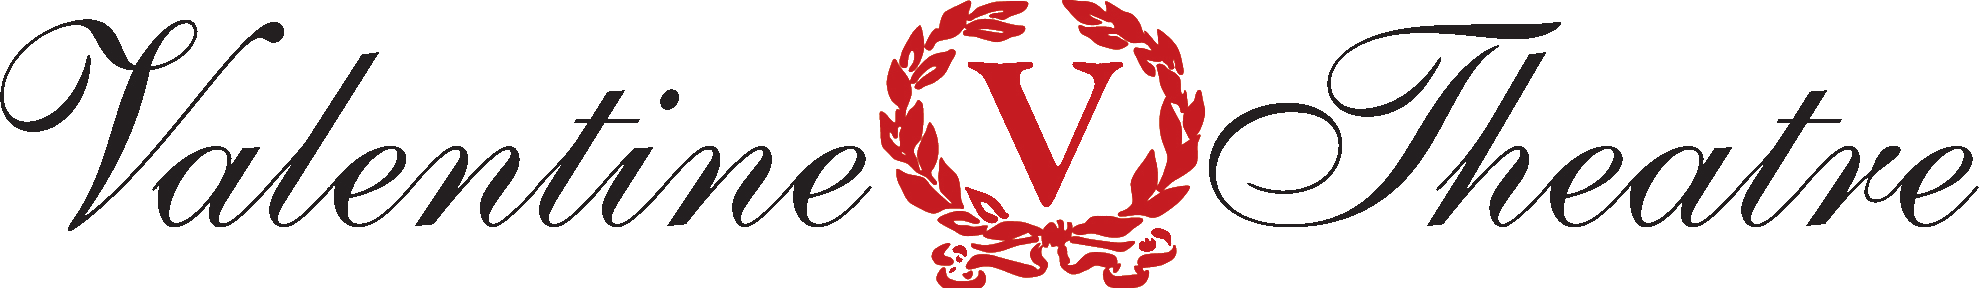 Valentine Theatre logo